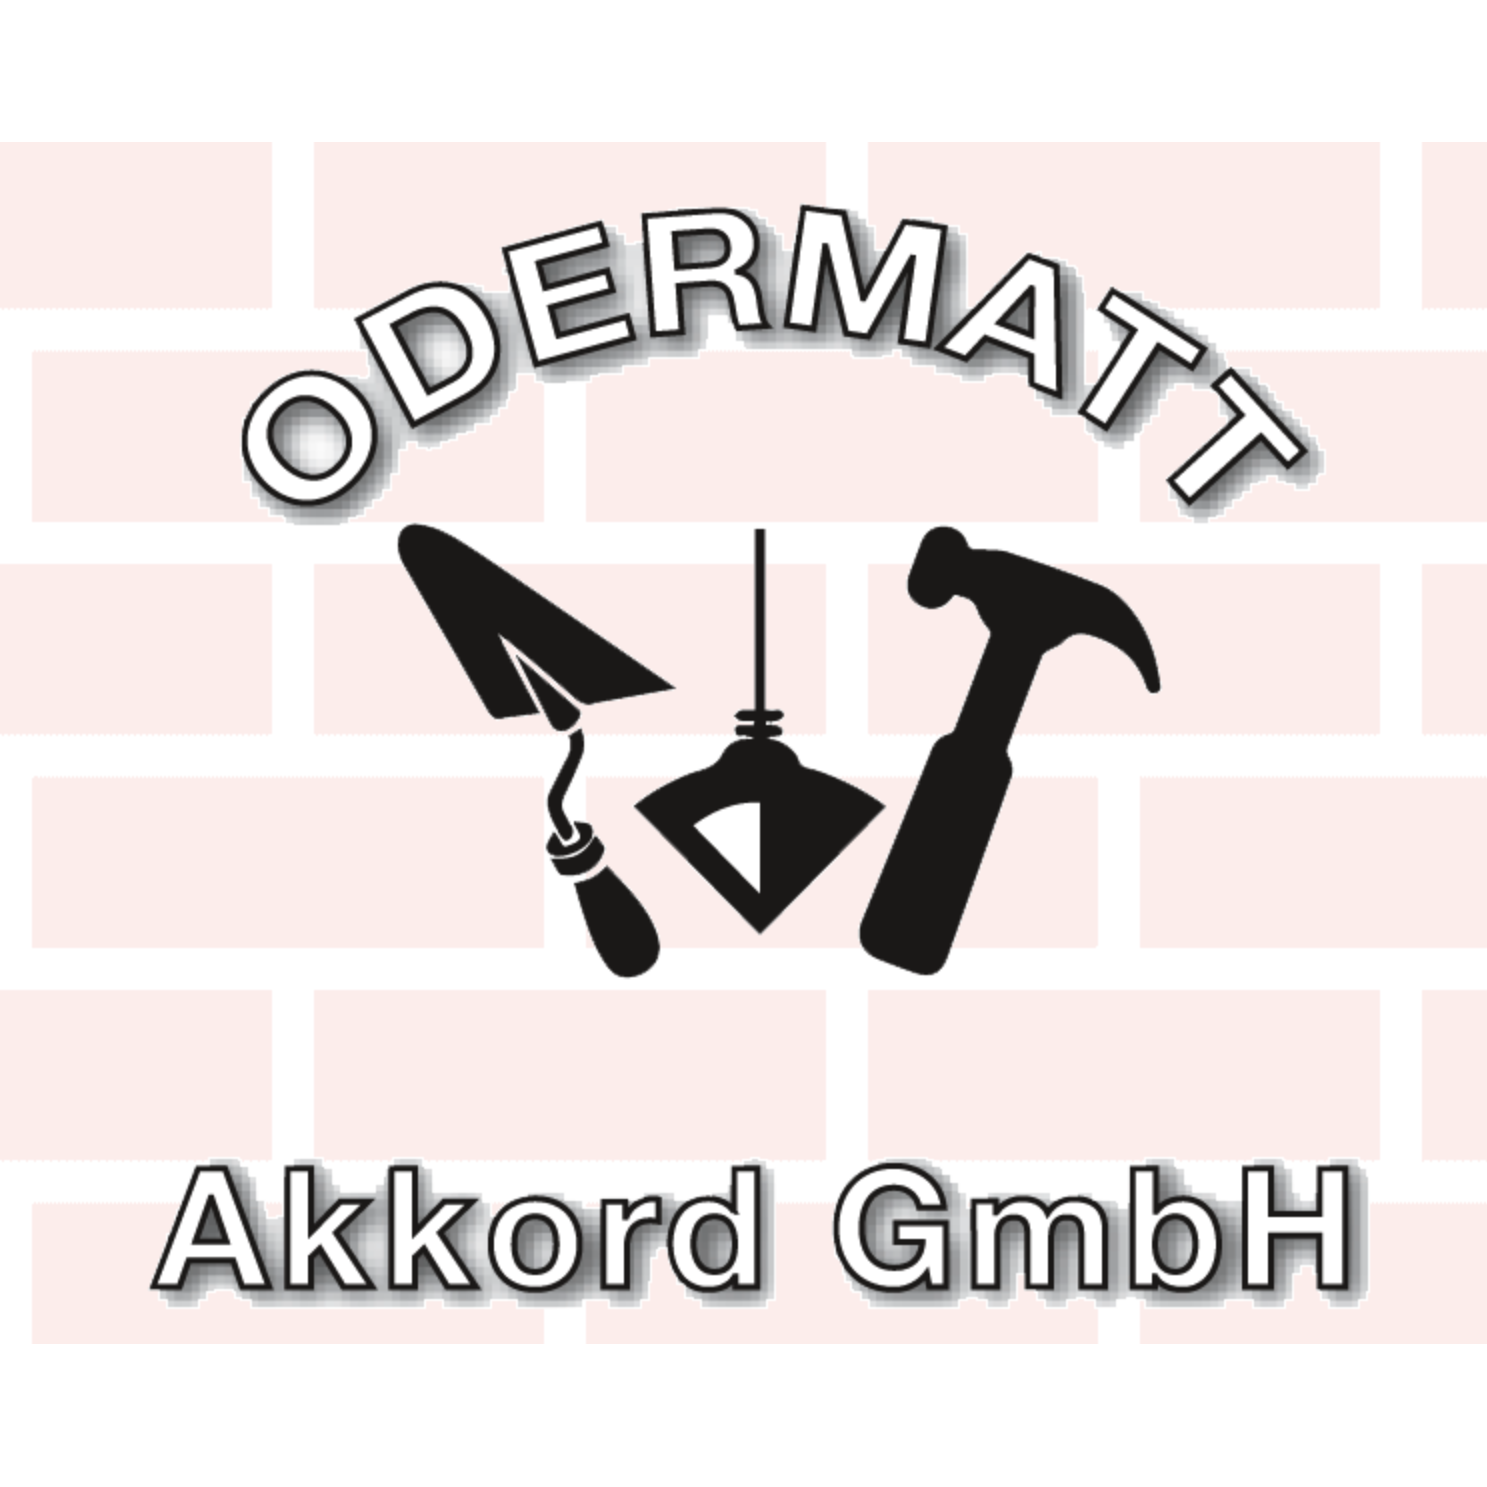 Odermatt-Akkord GmbH Logo